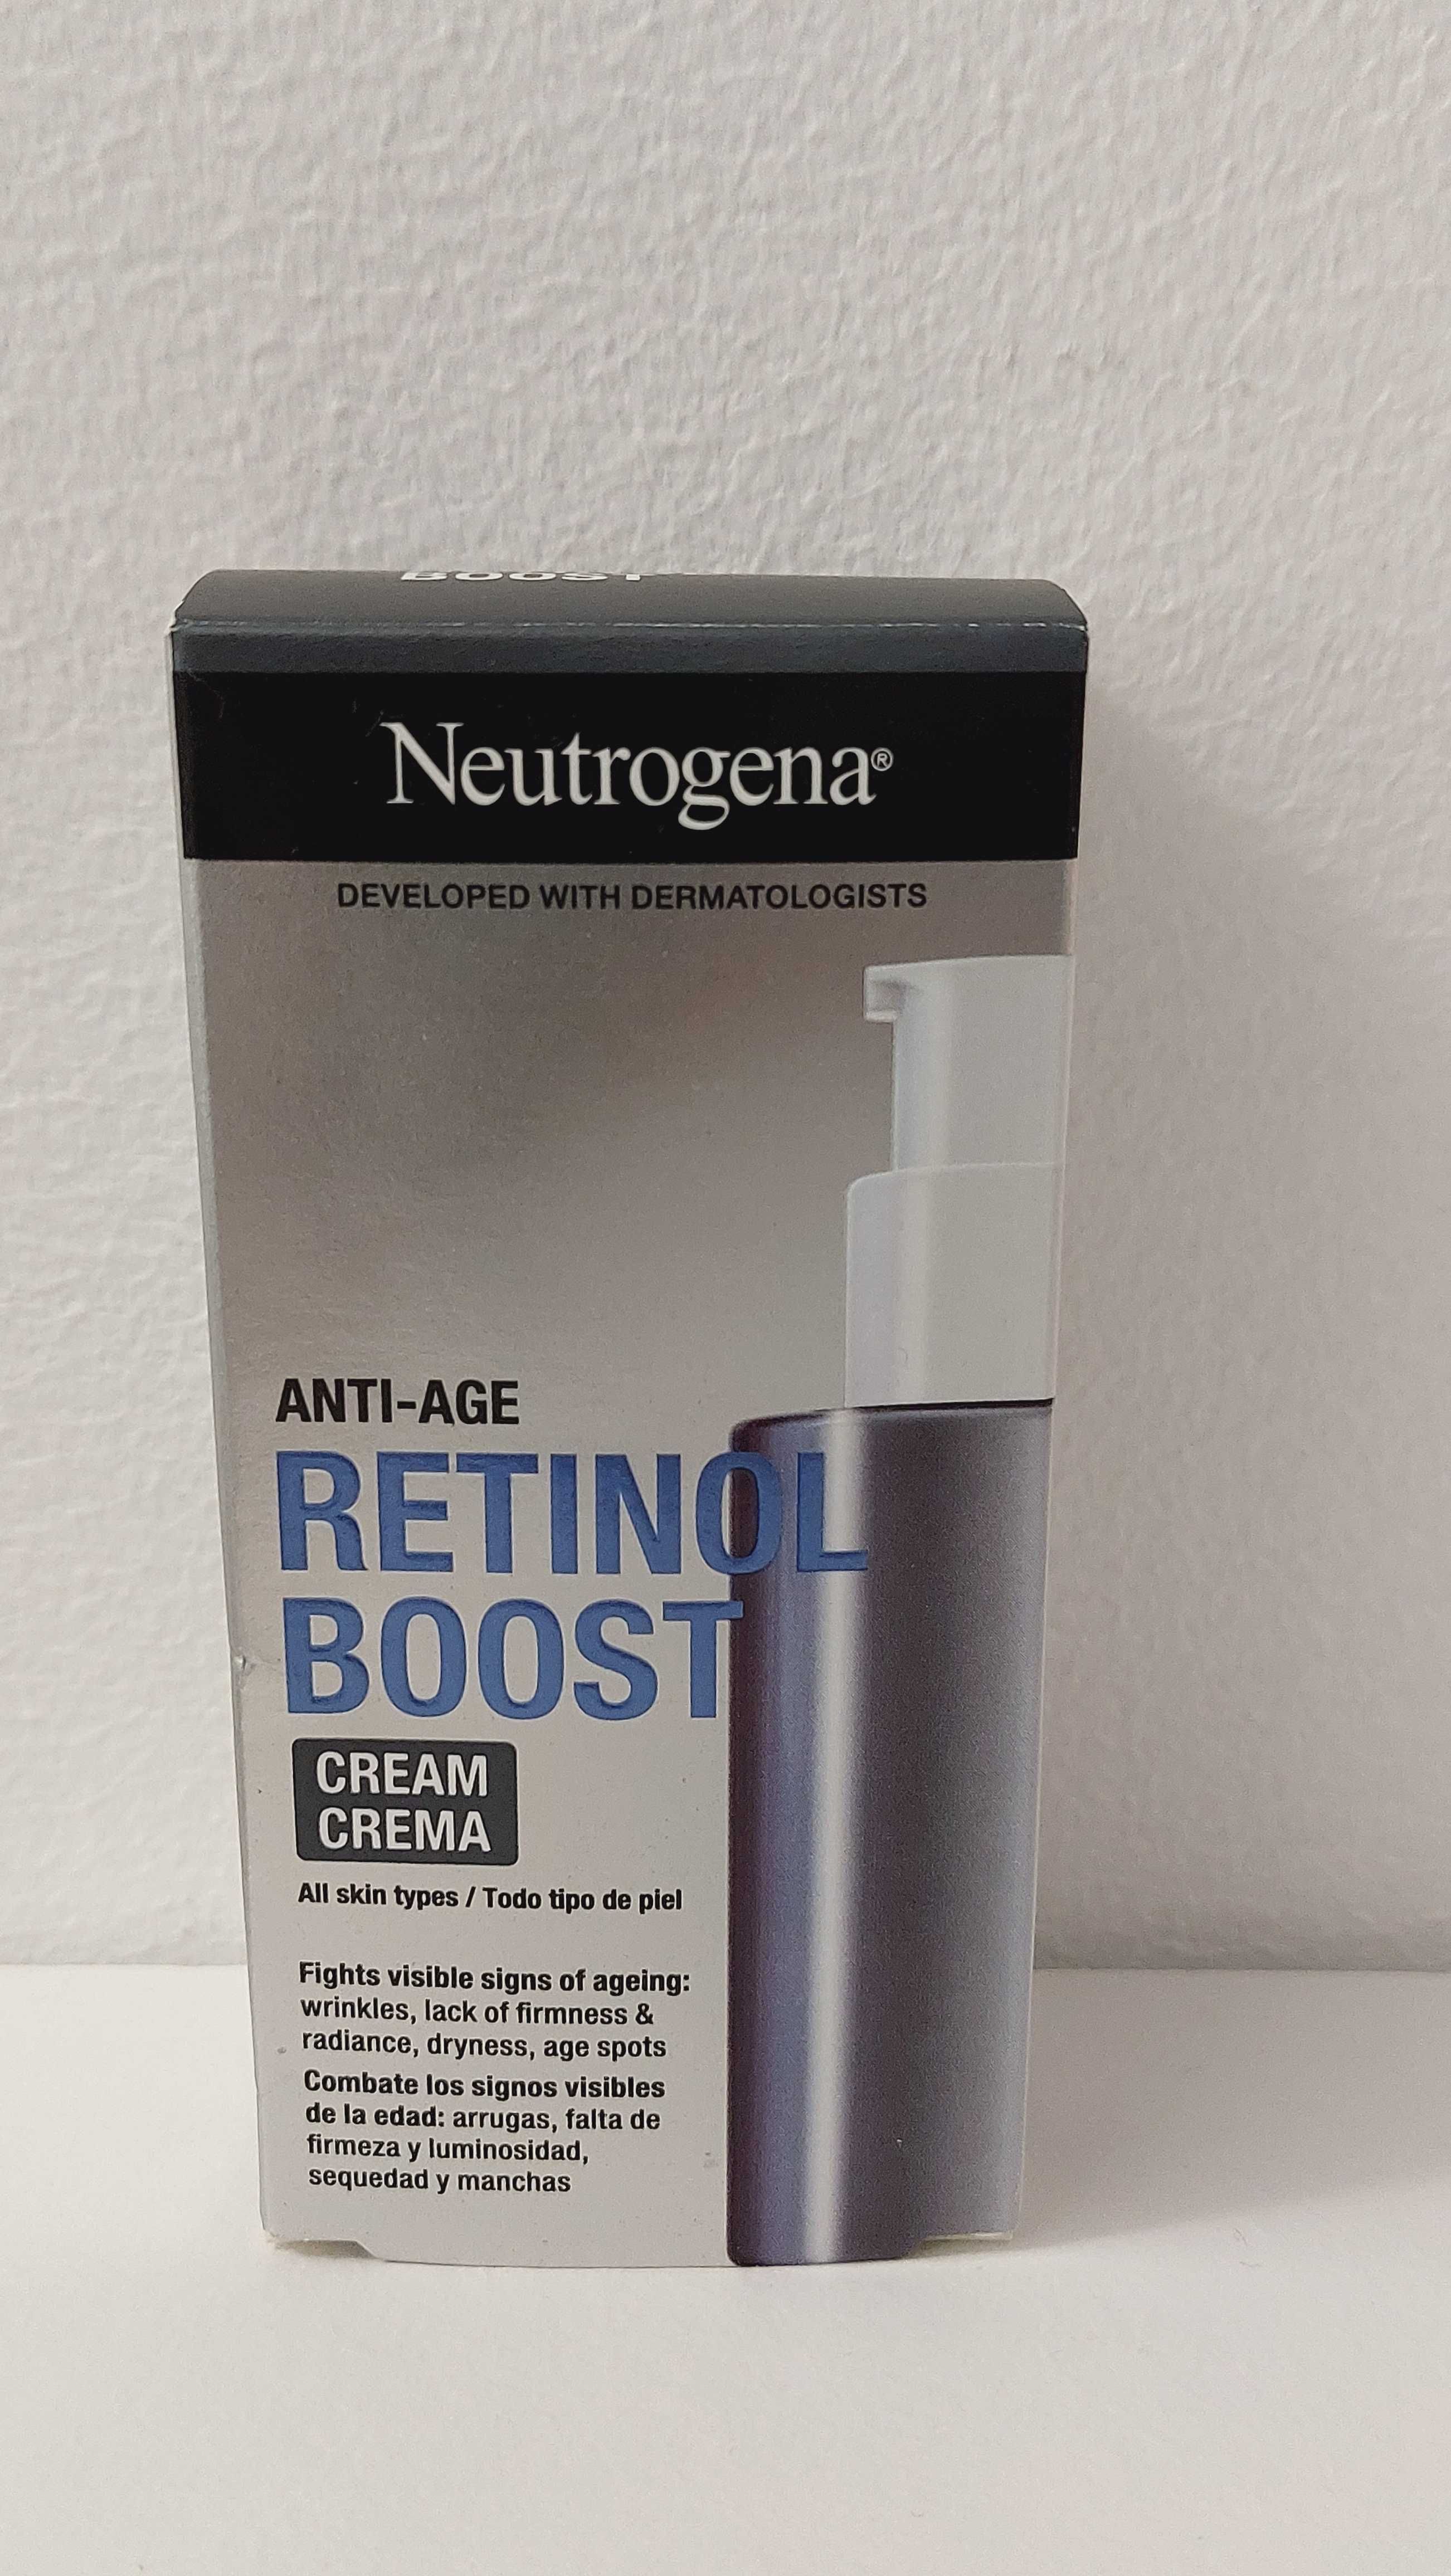 Neutrogena Retinol Boost Creme 50mL